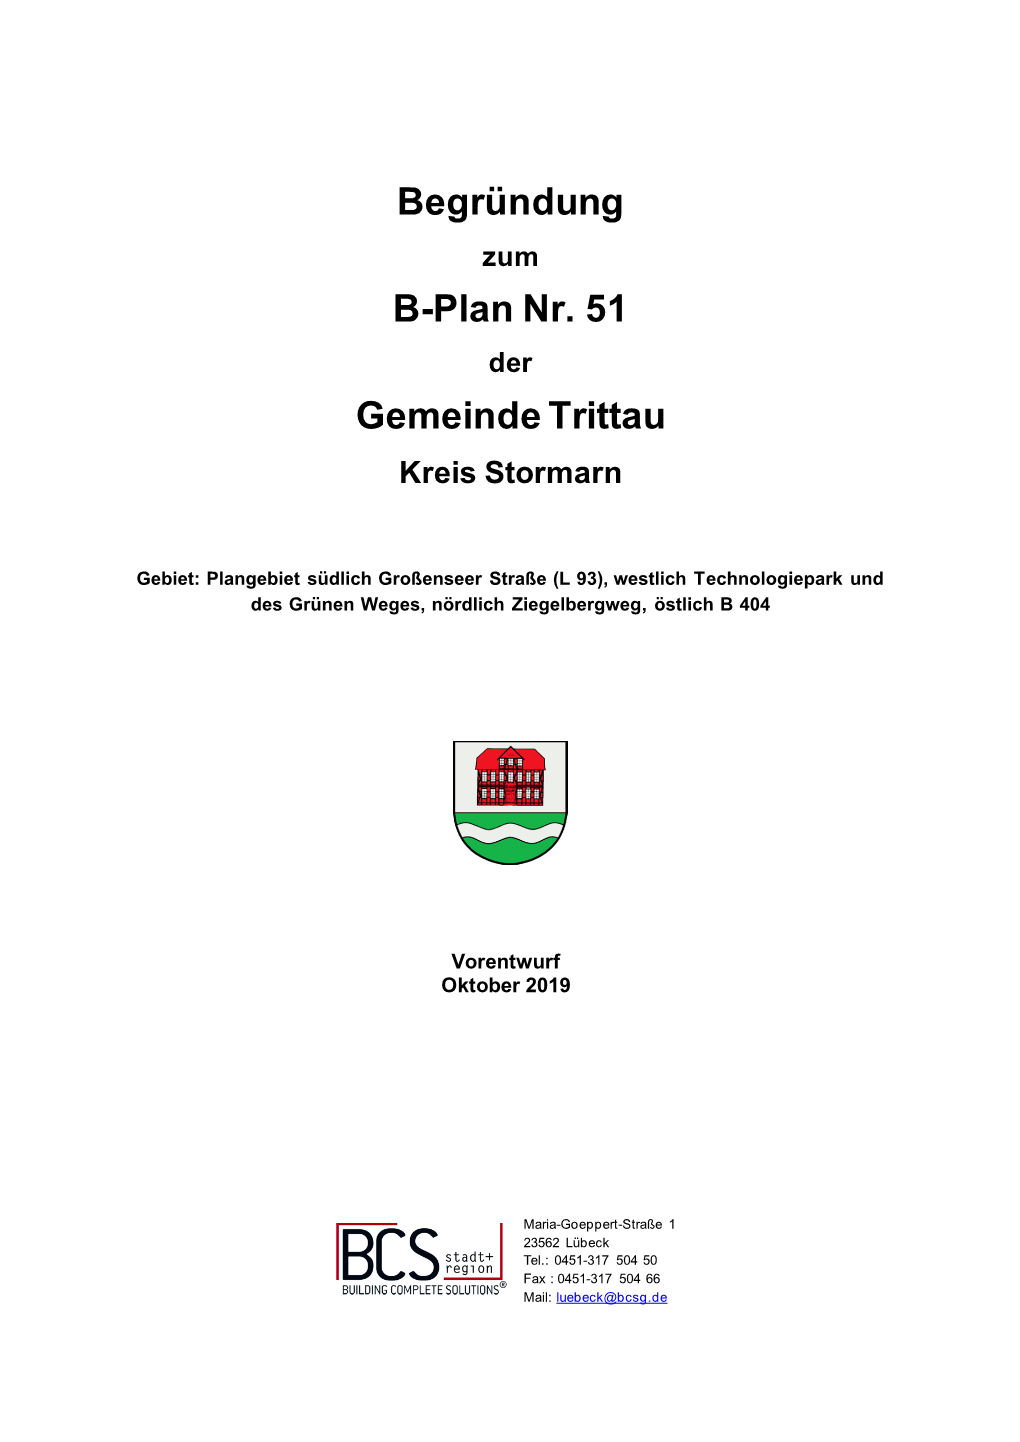 Begründung B-Plan Nr. 51 Gemeinde Trittau